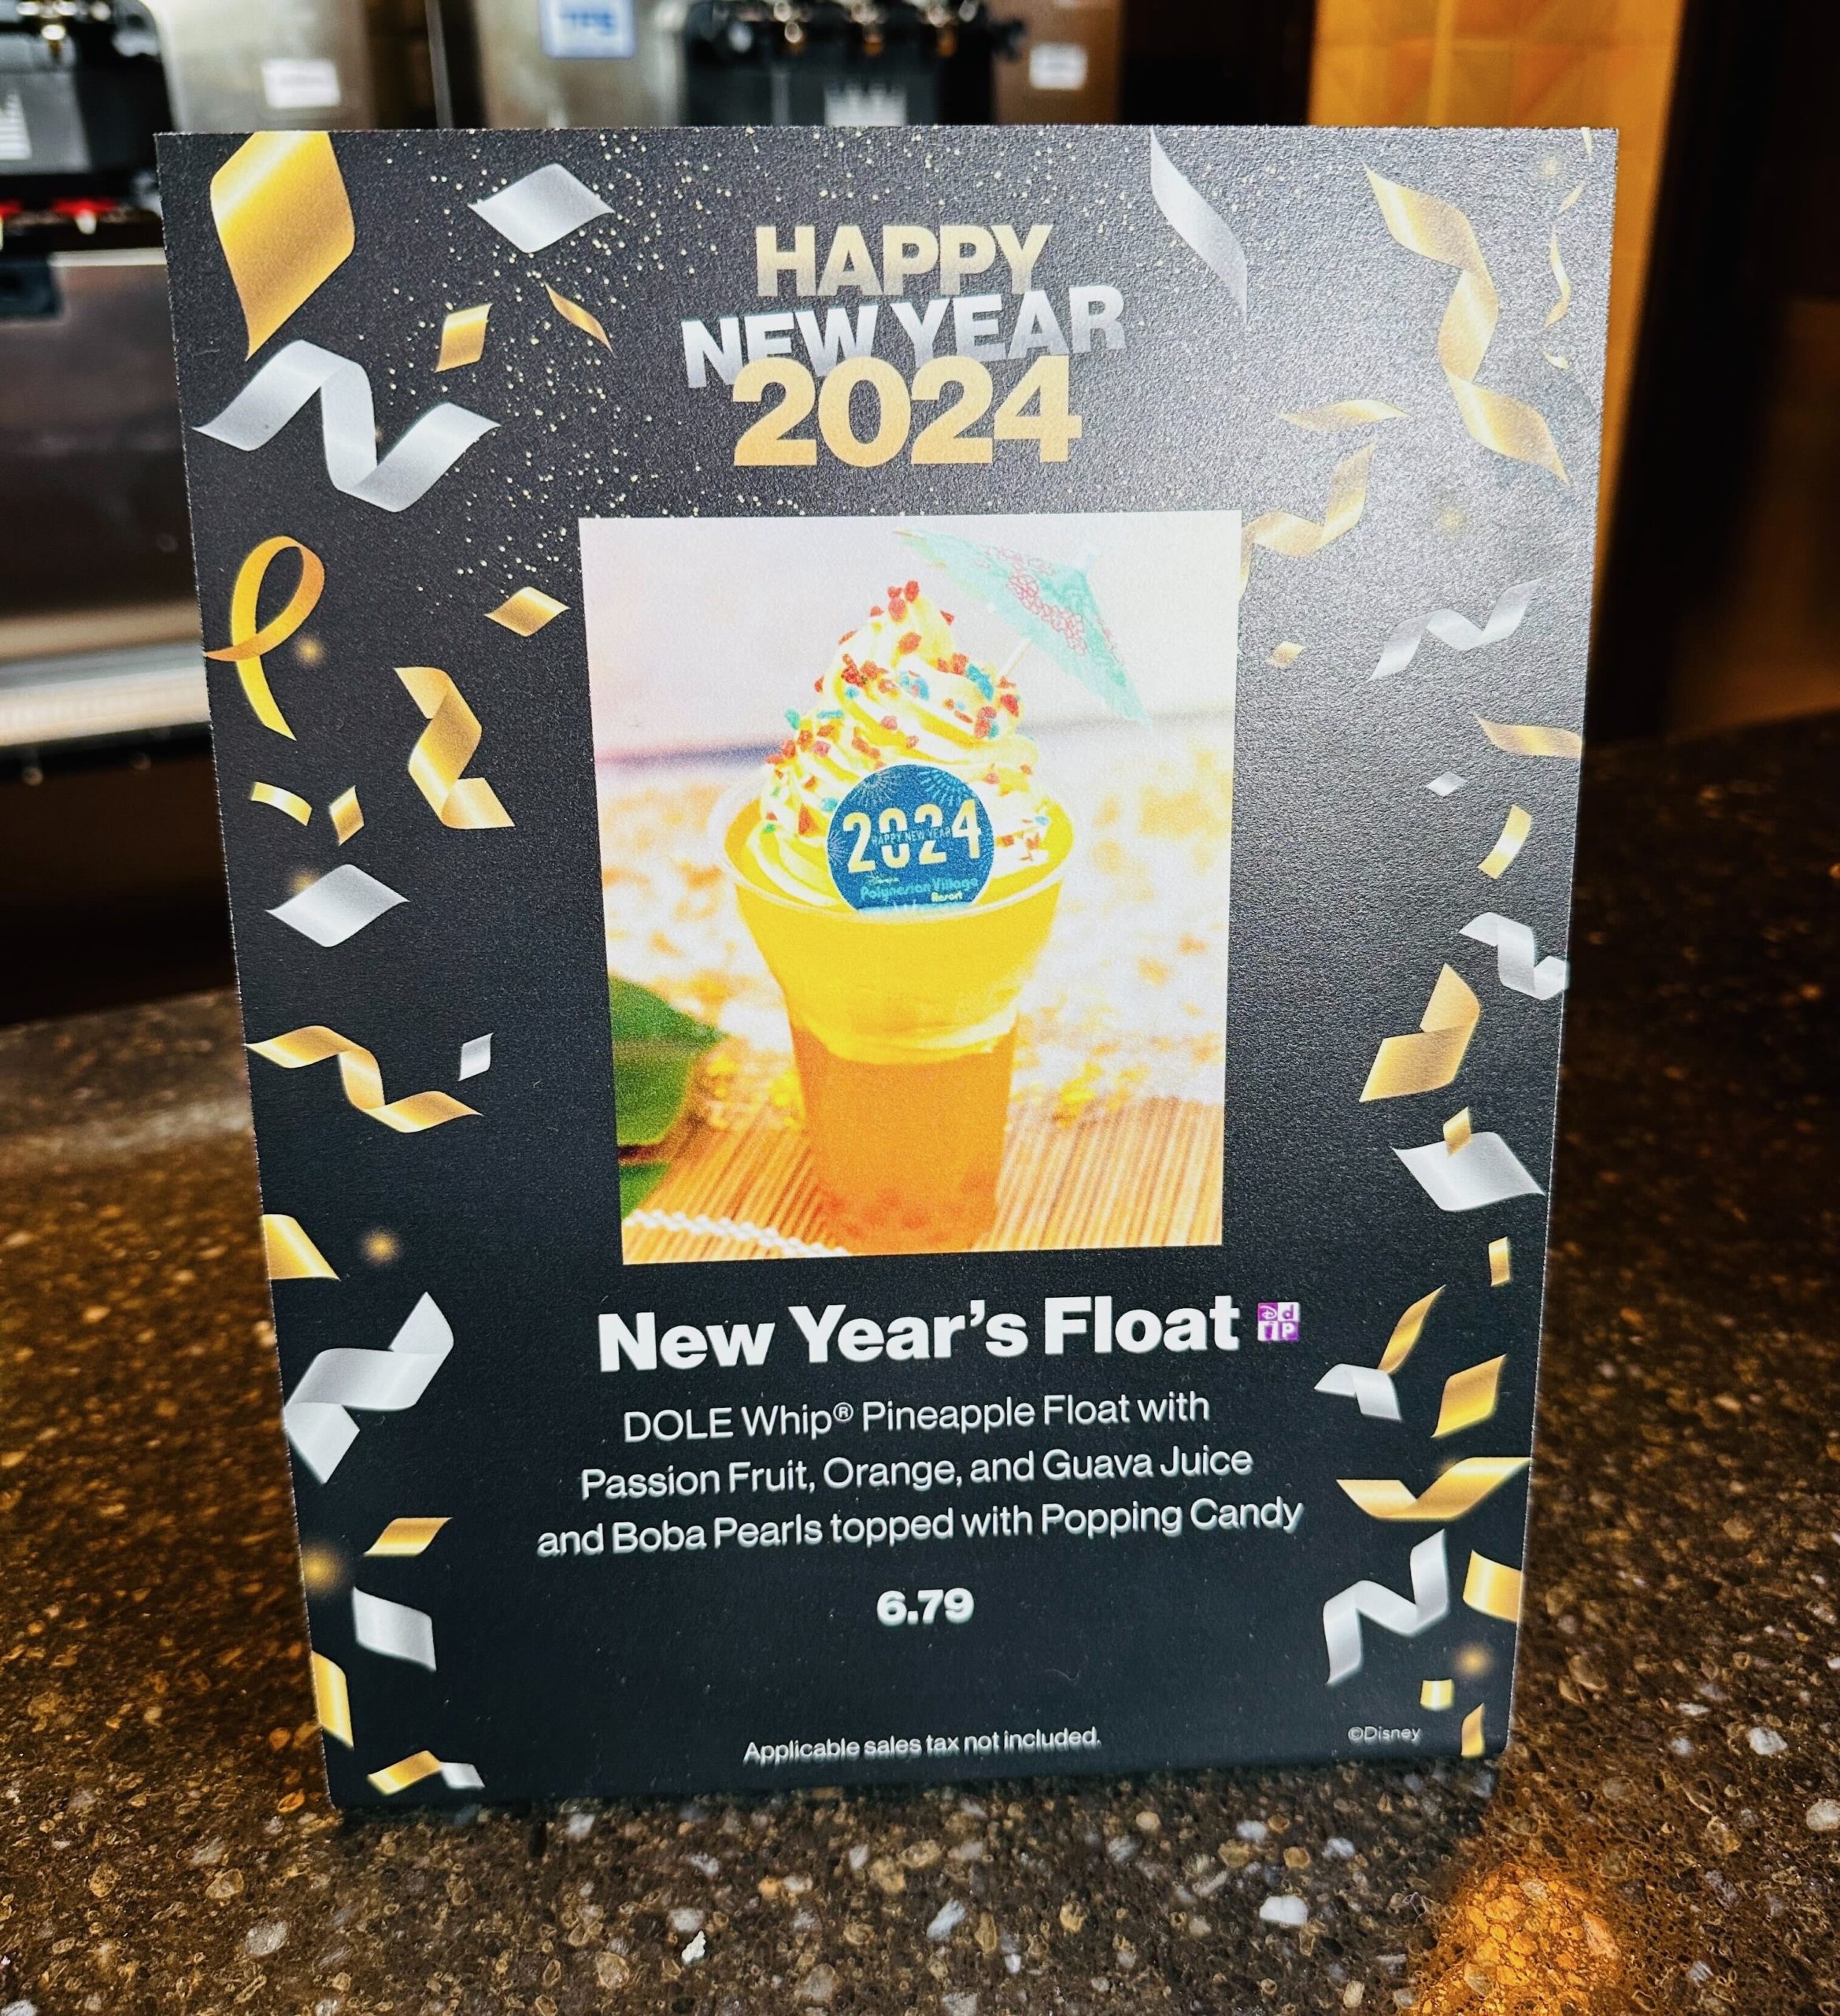 New Year's Float signage